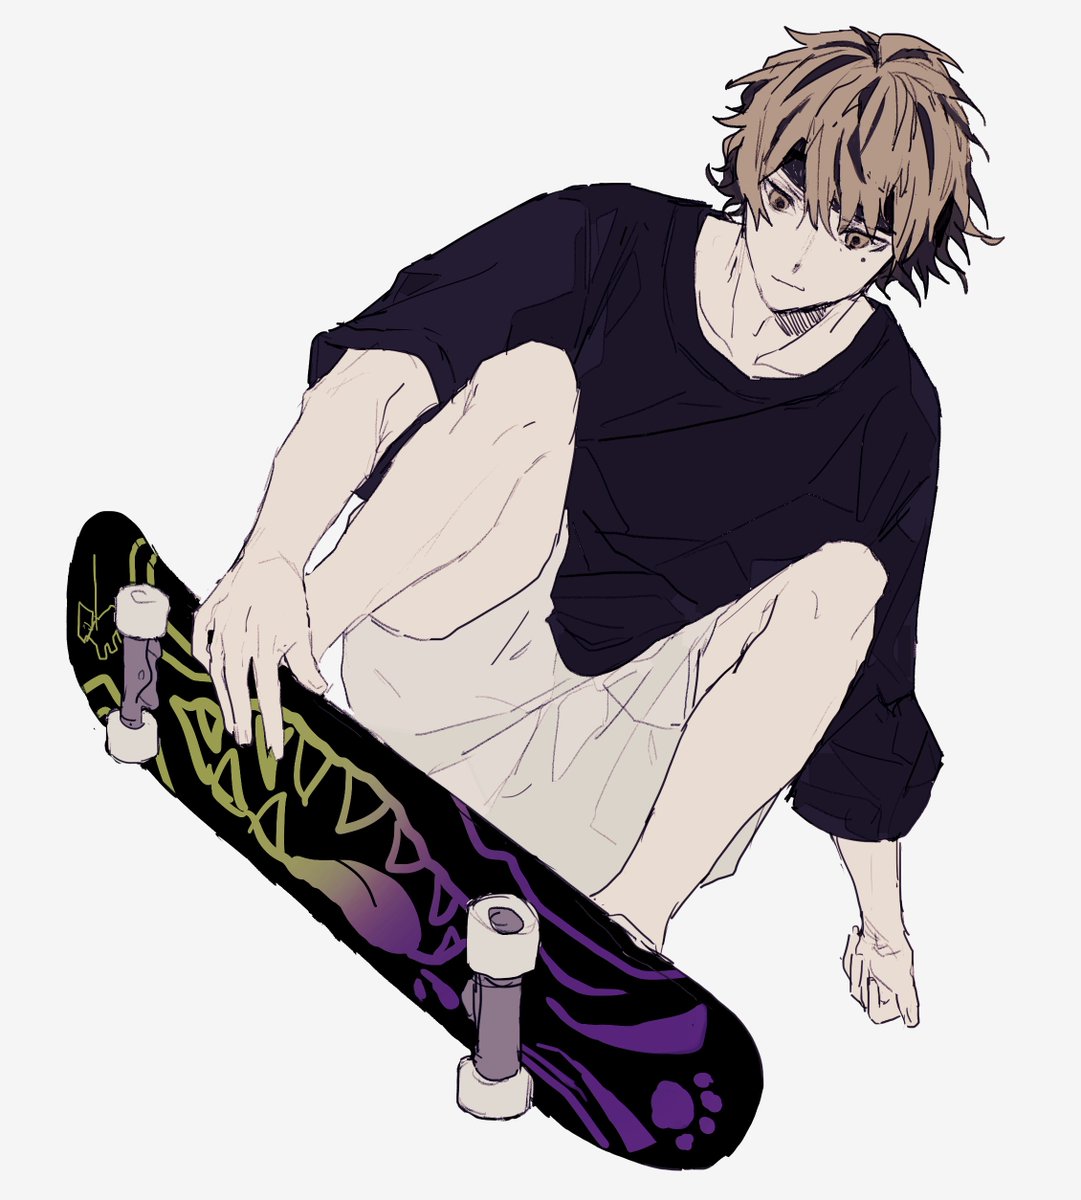 2boys multiple boys skateboard shorts male focus shoes shirt  illustration images